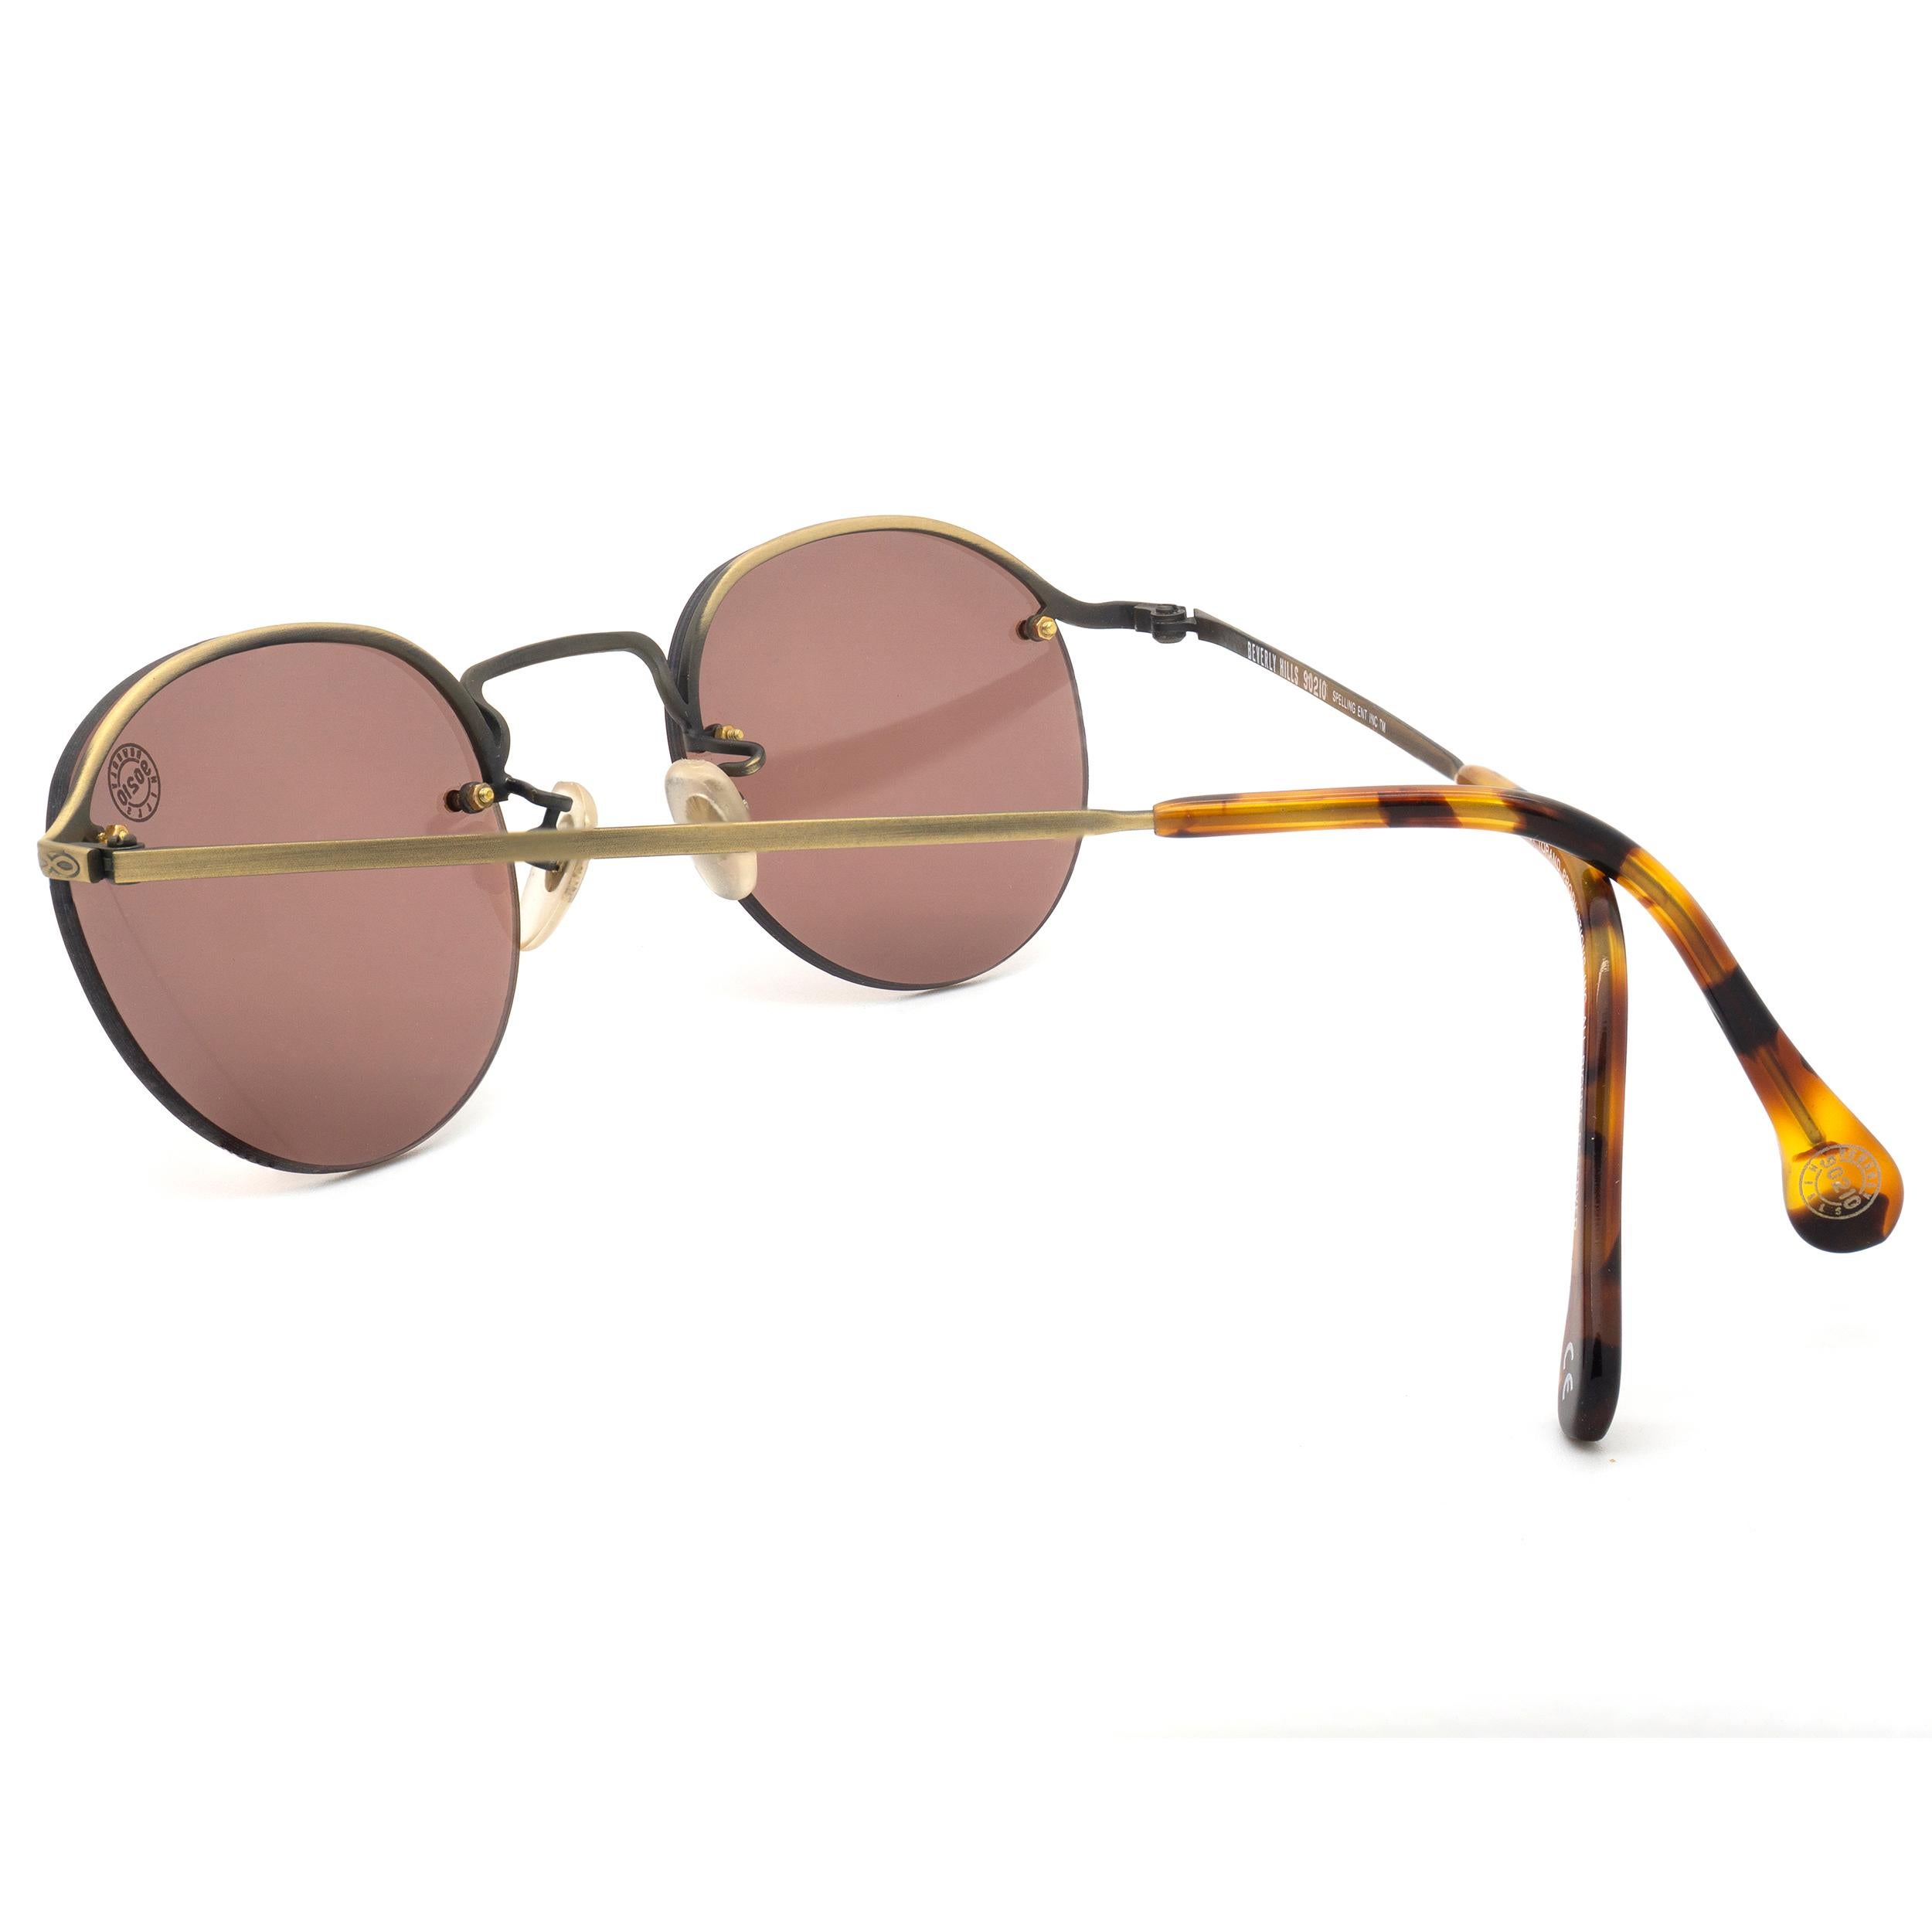 antique sunglasses for sale